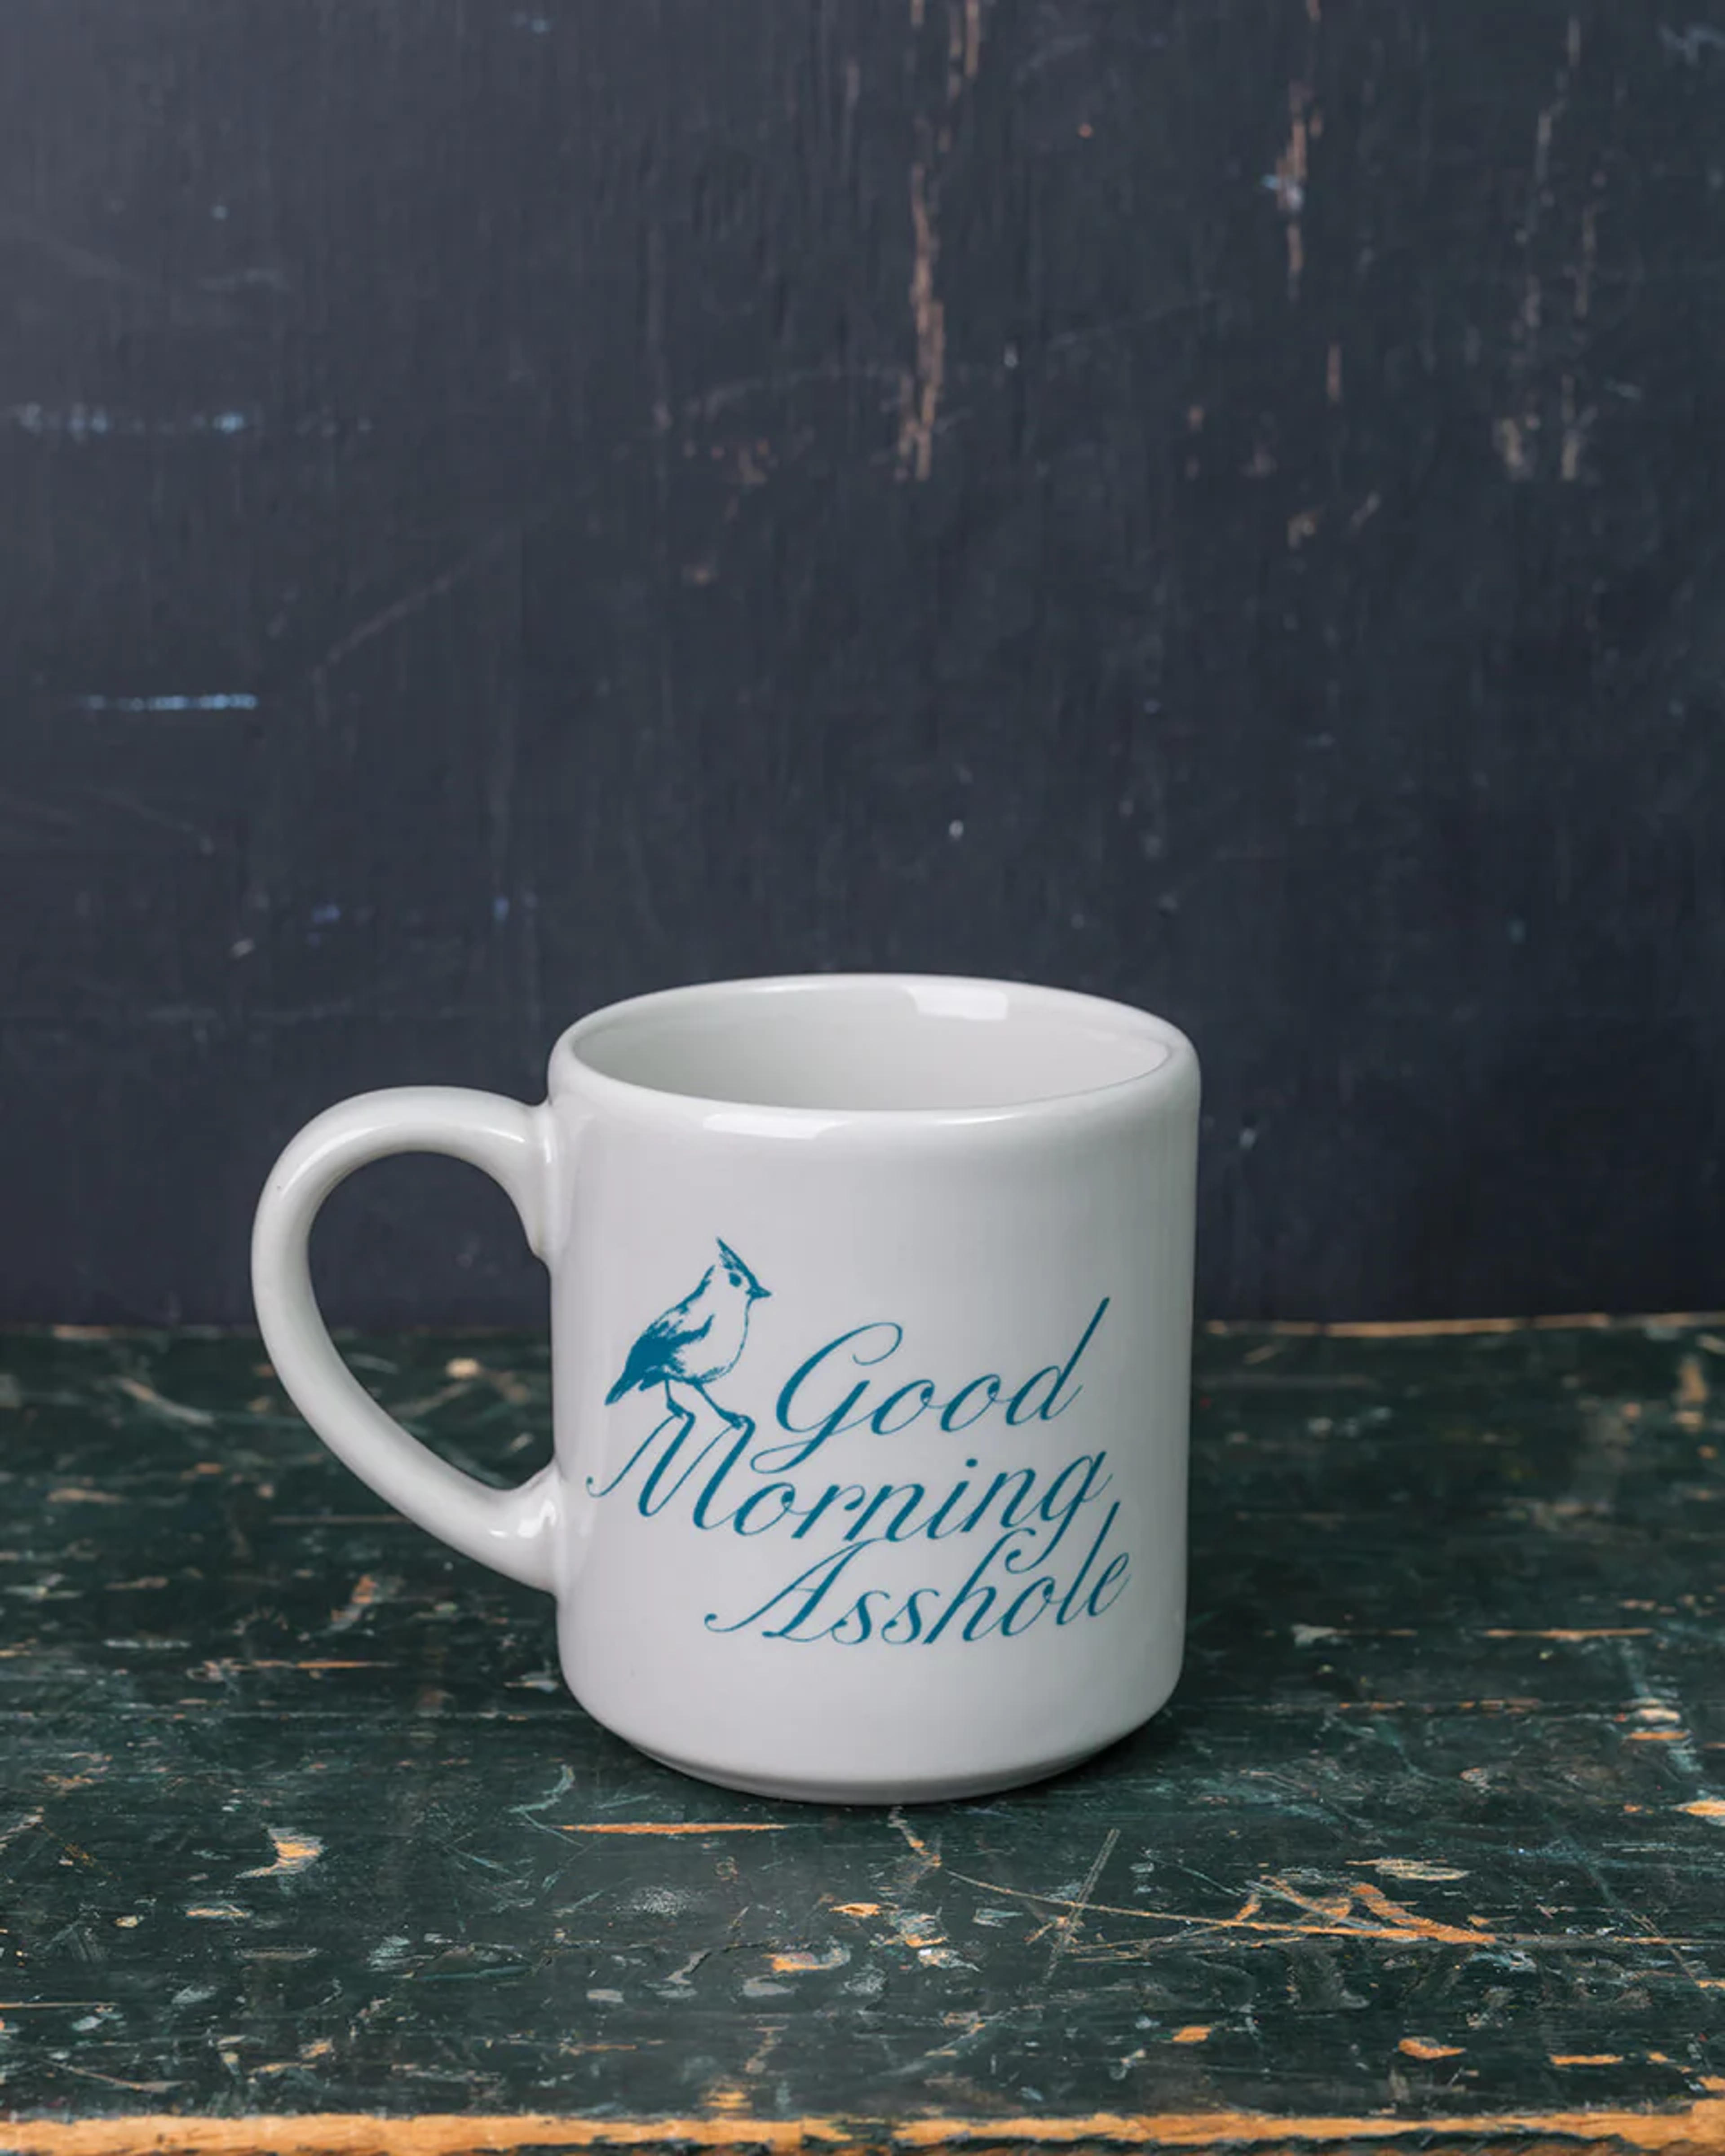 "Good Morning Asshole" Mug WEB – Fishs Eddy